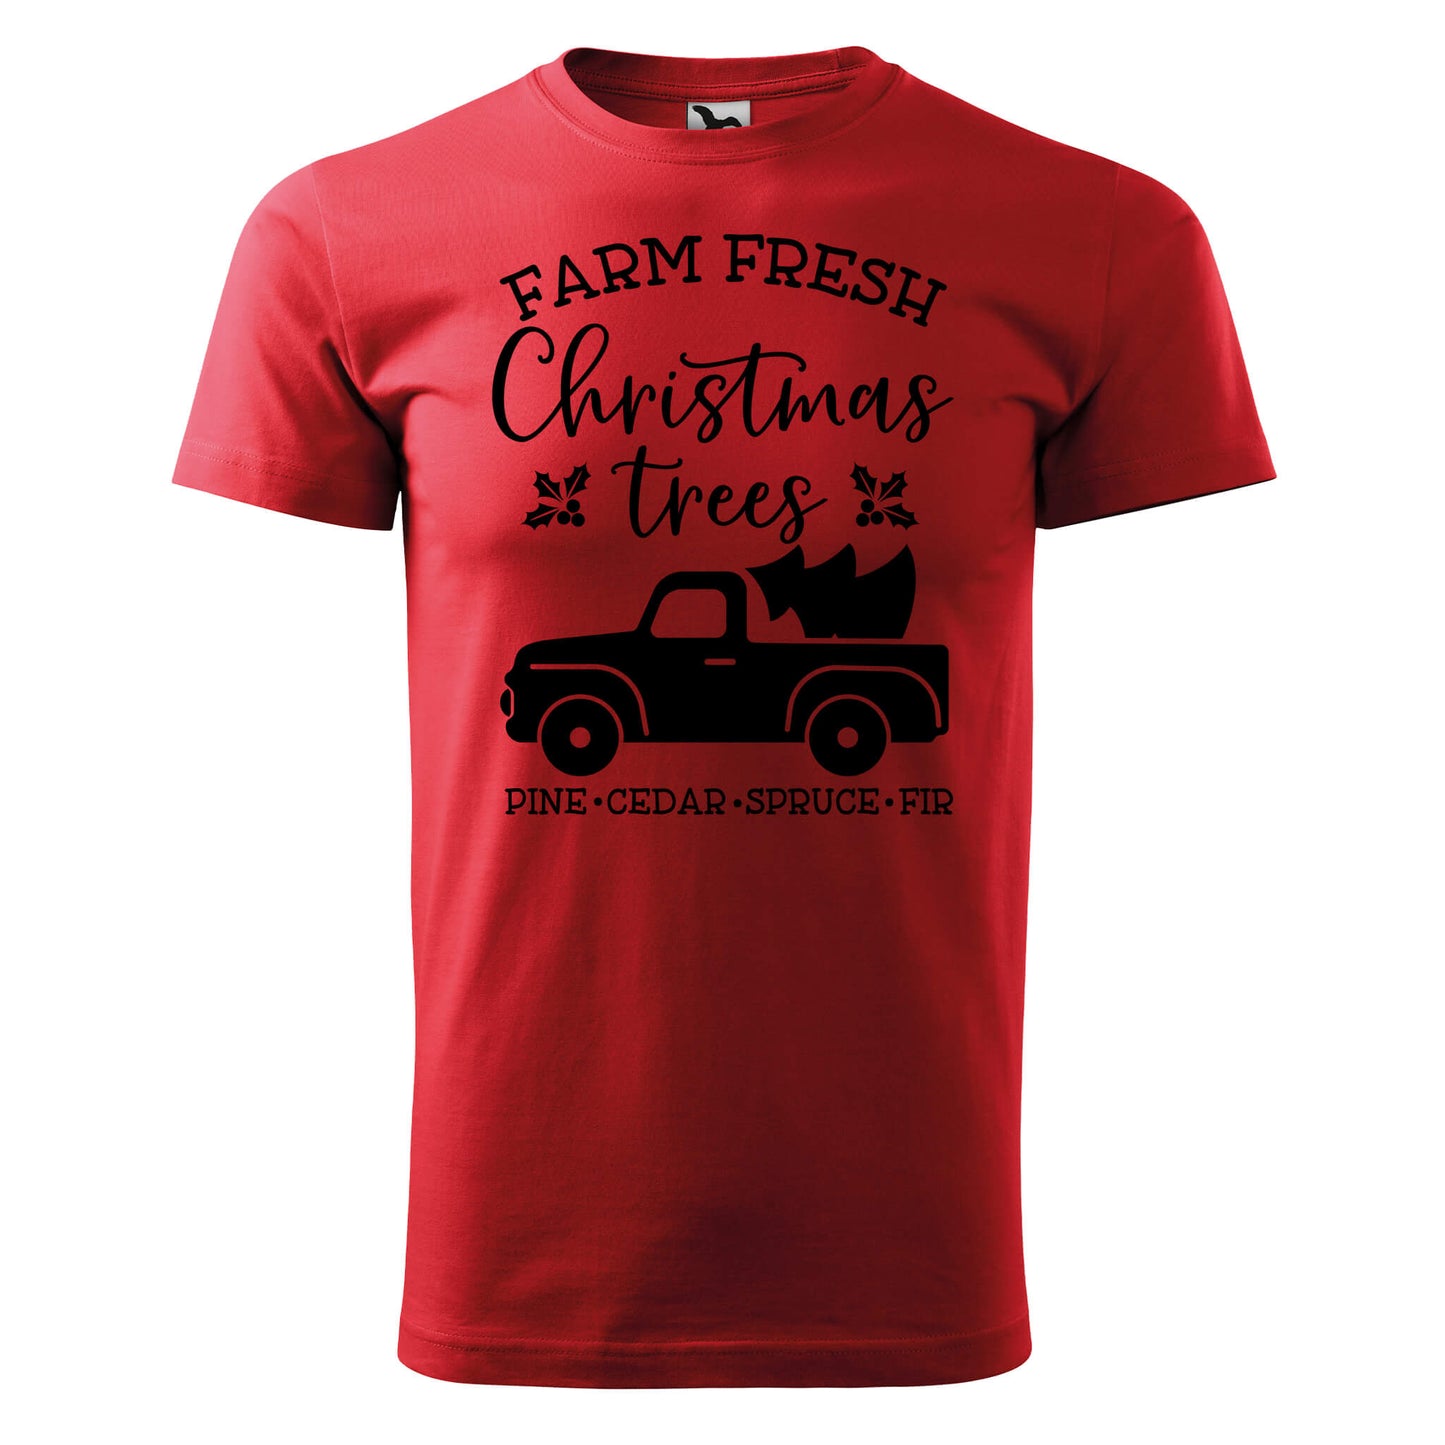 Farm fresh christmas trees 2 t-shirt - rvdesignprint